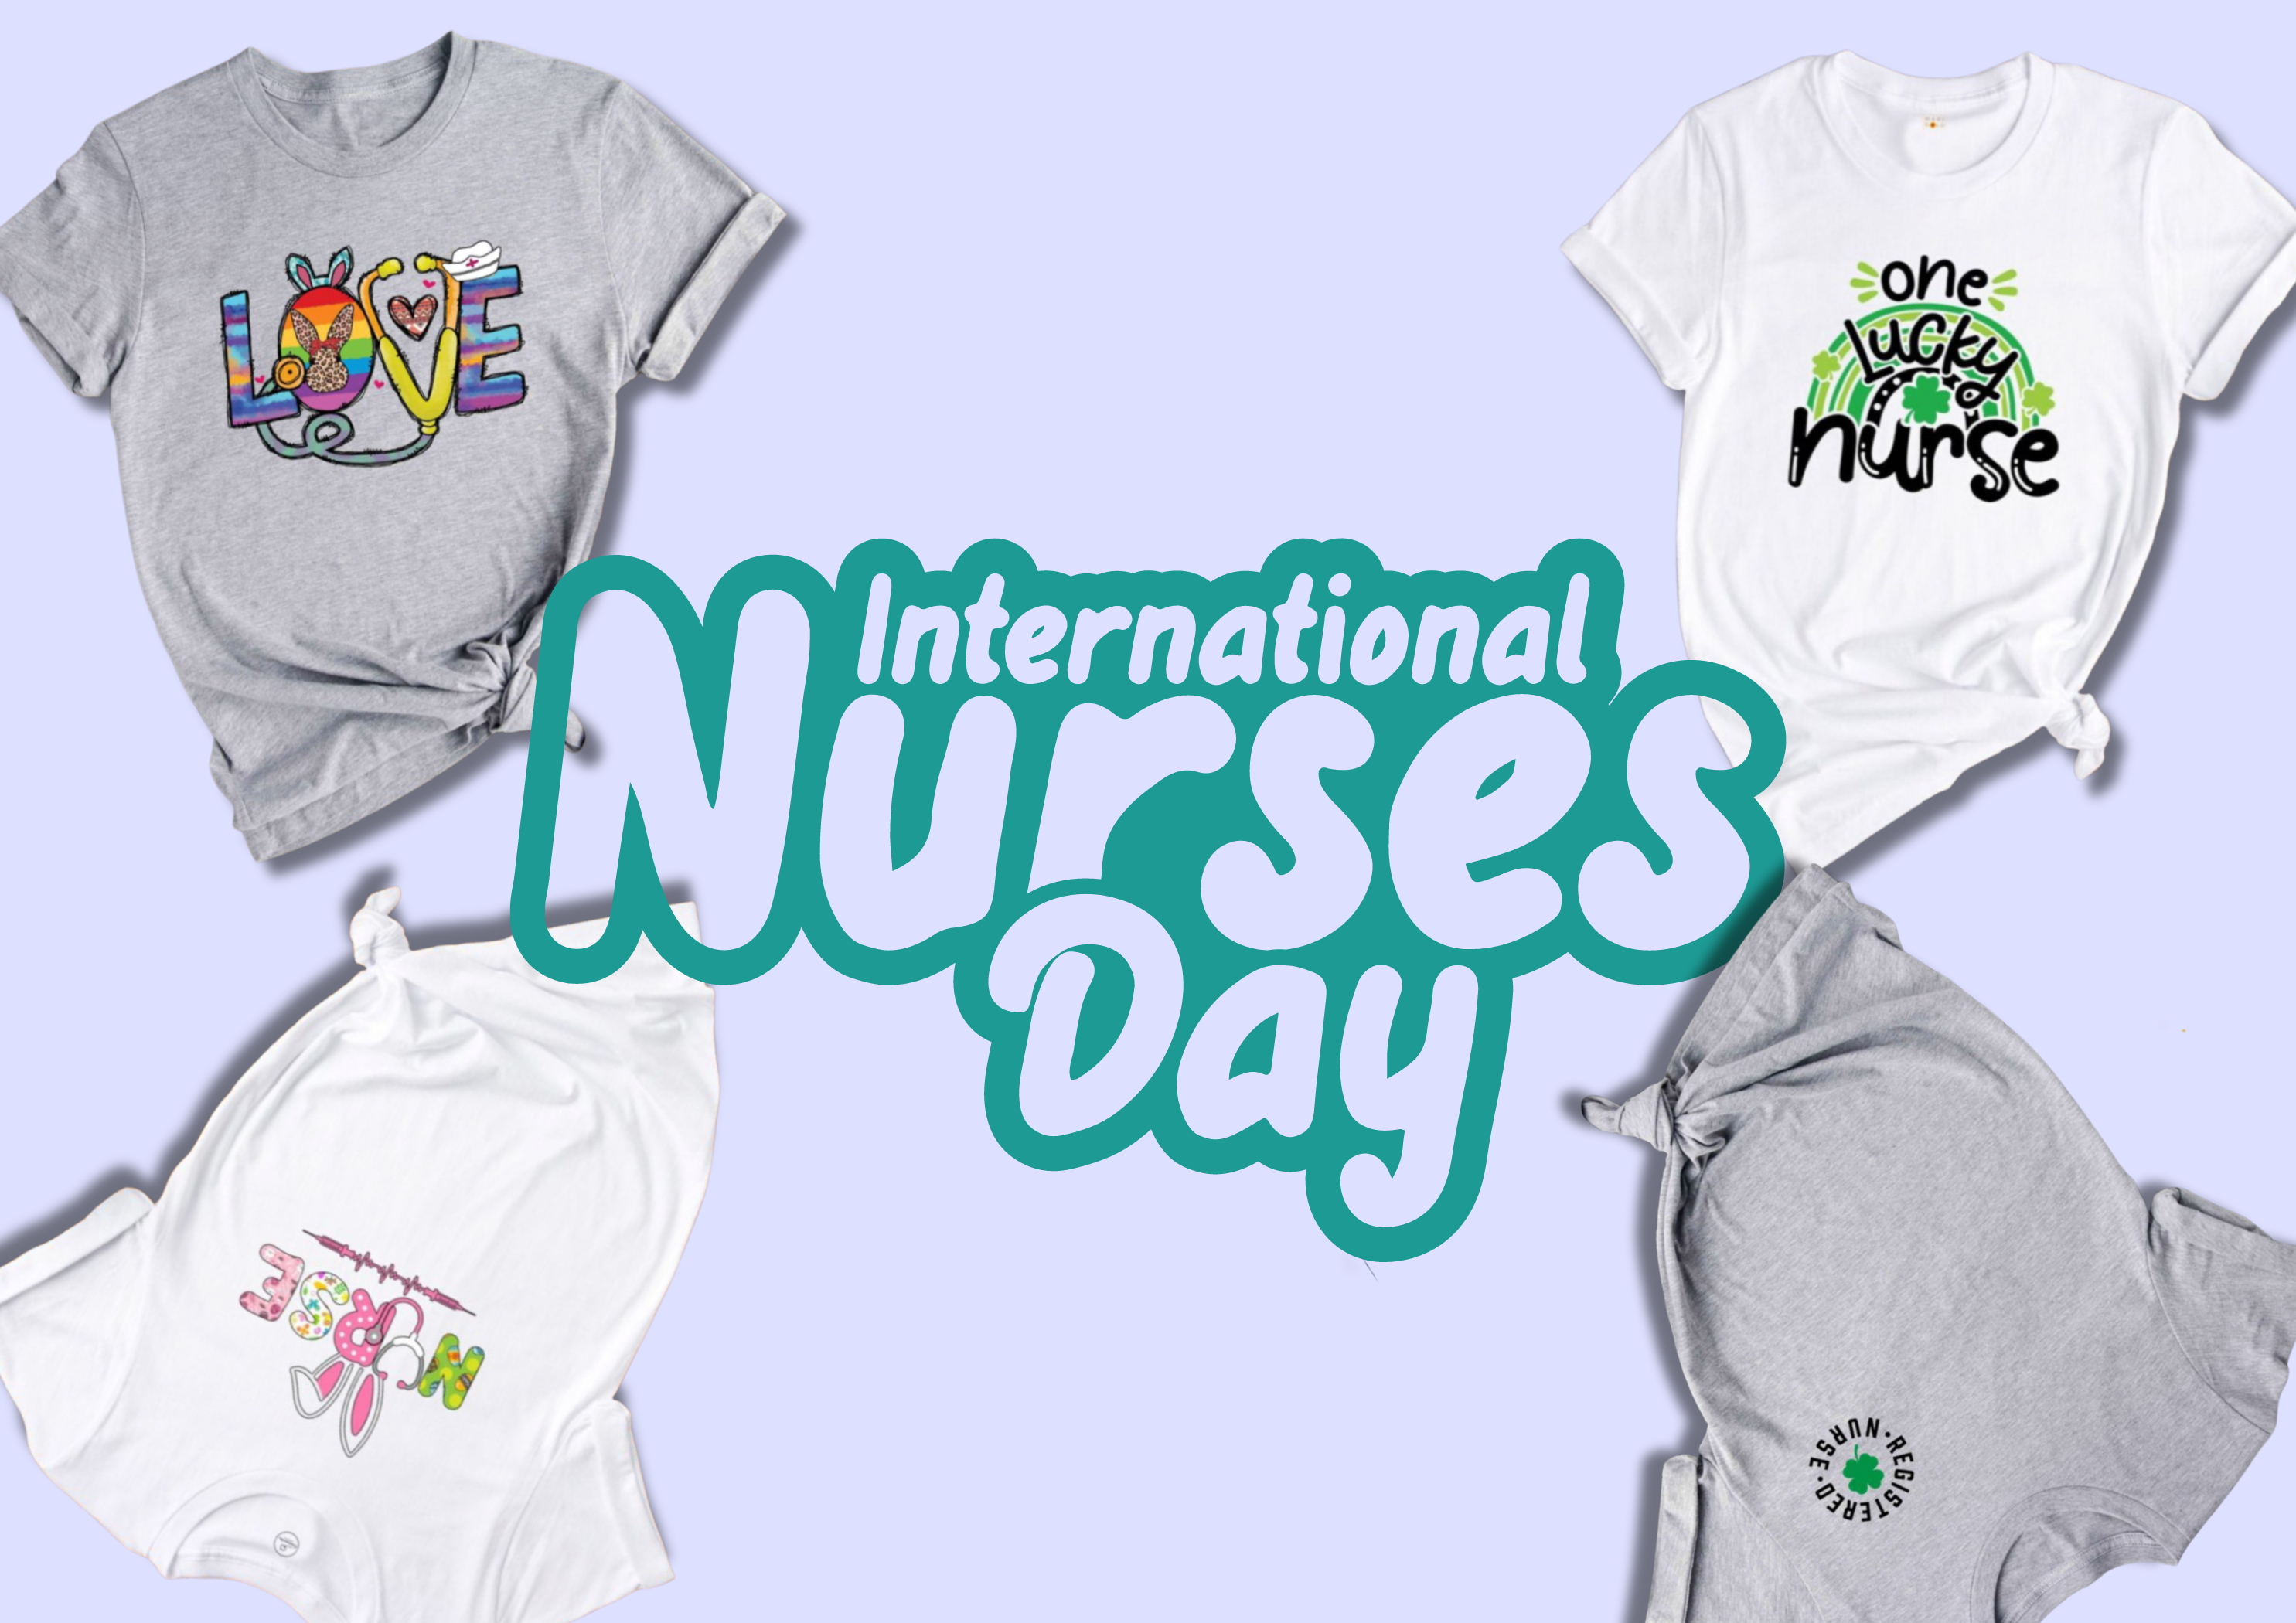 Nurse Day Shirts: Celebrate Healthcare Heroes